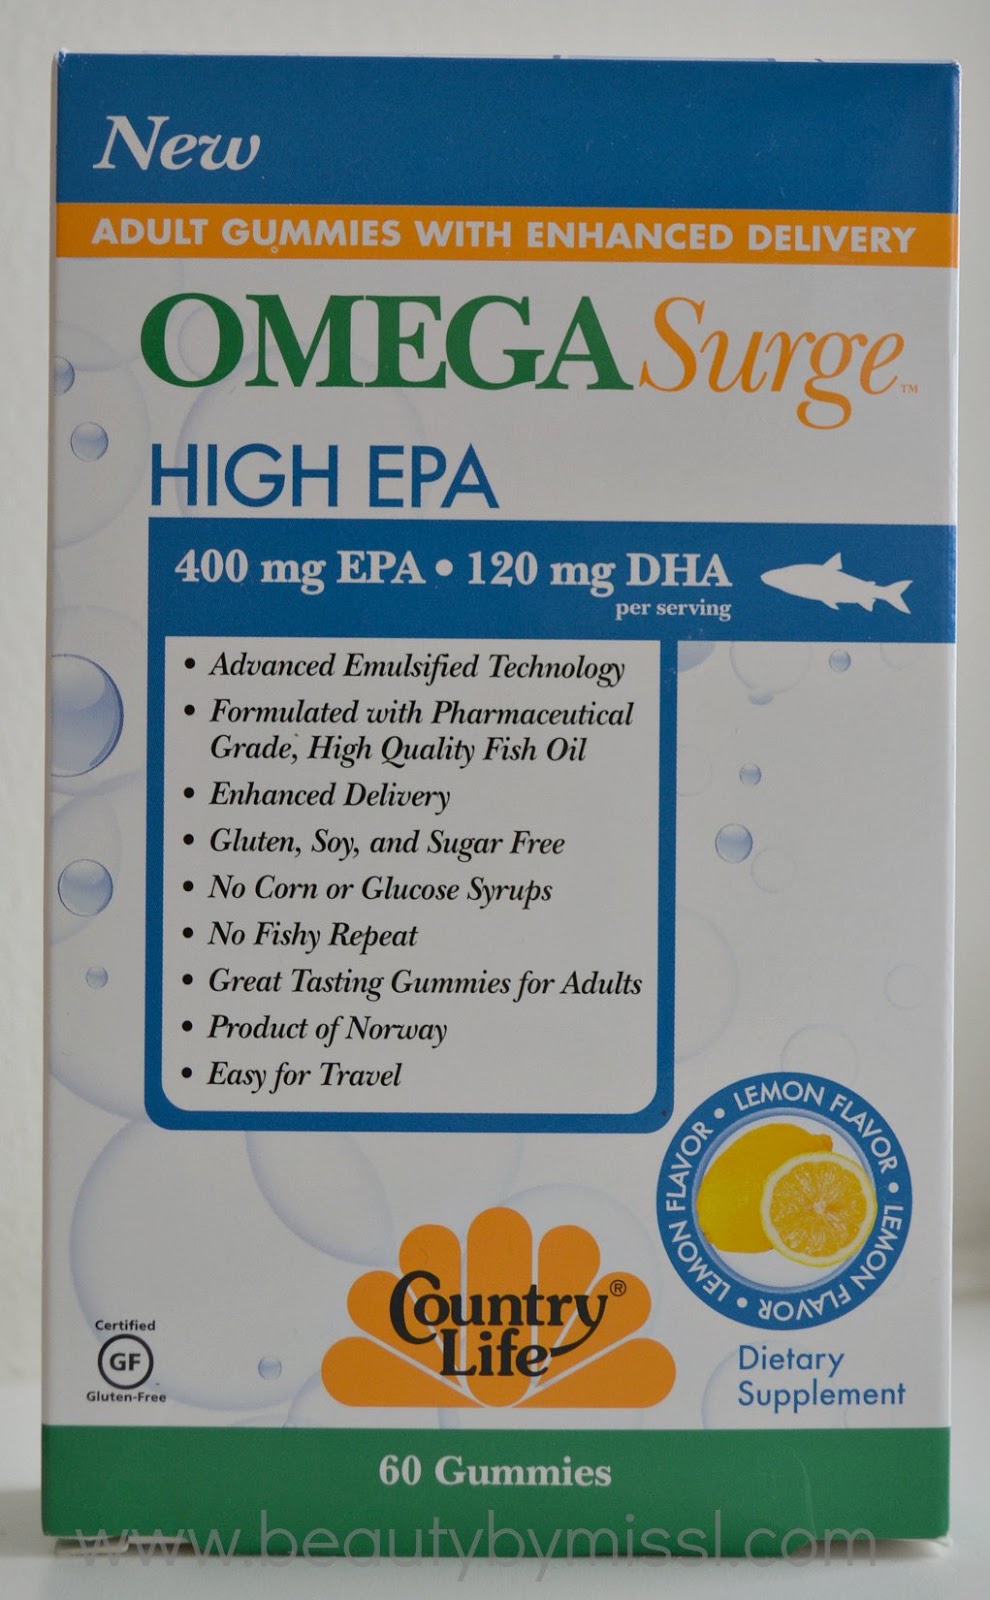 Country Life Omega Surge High EPA Lemon Gummies review